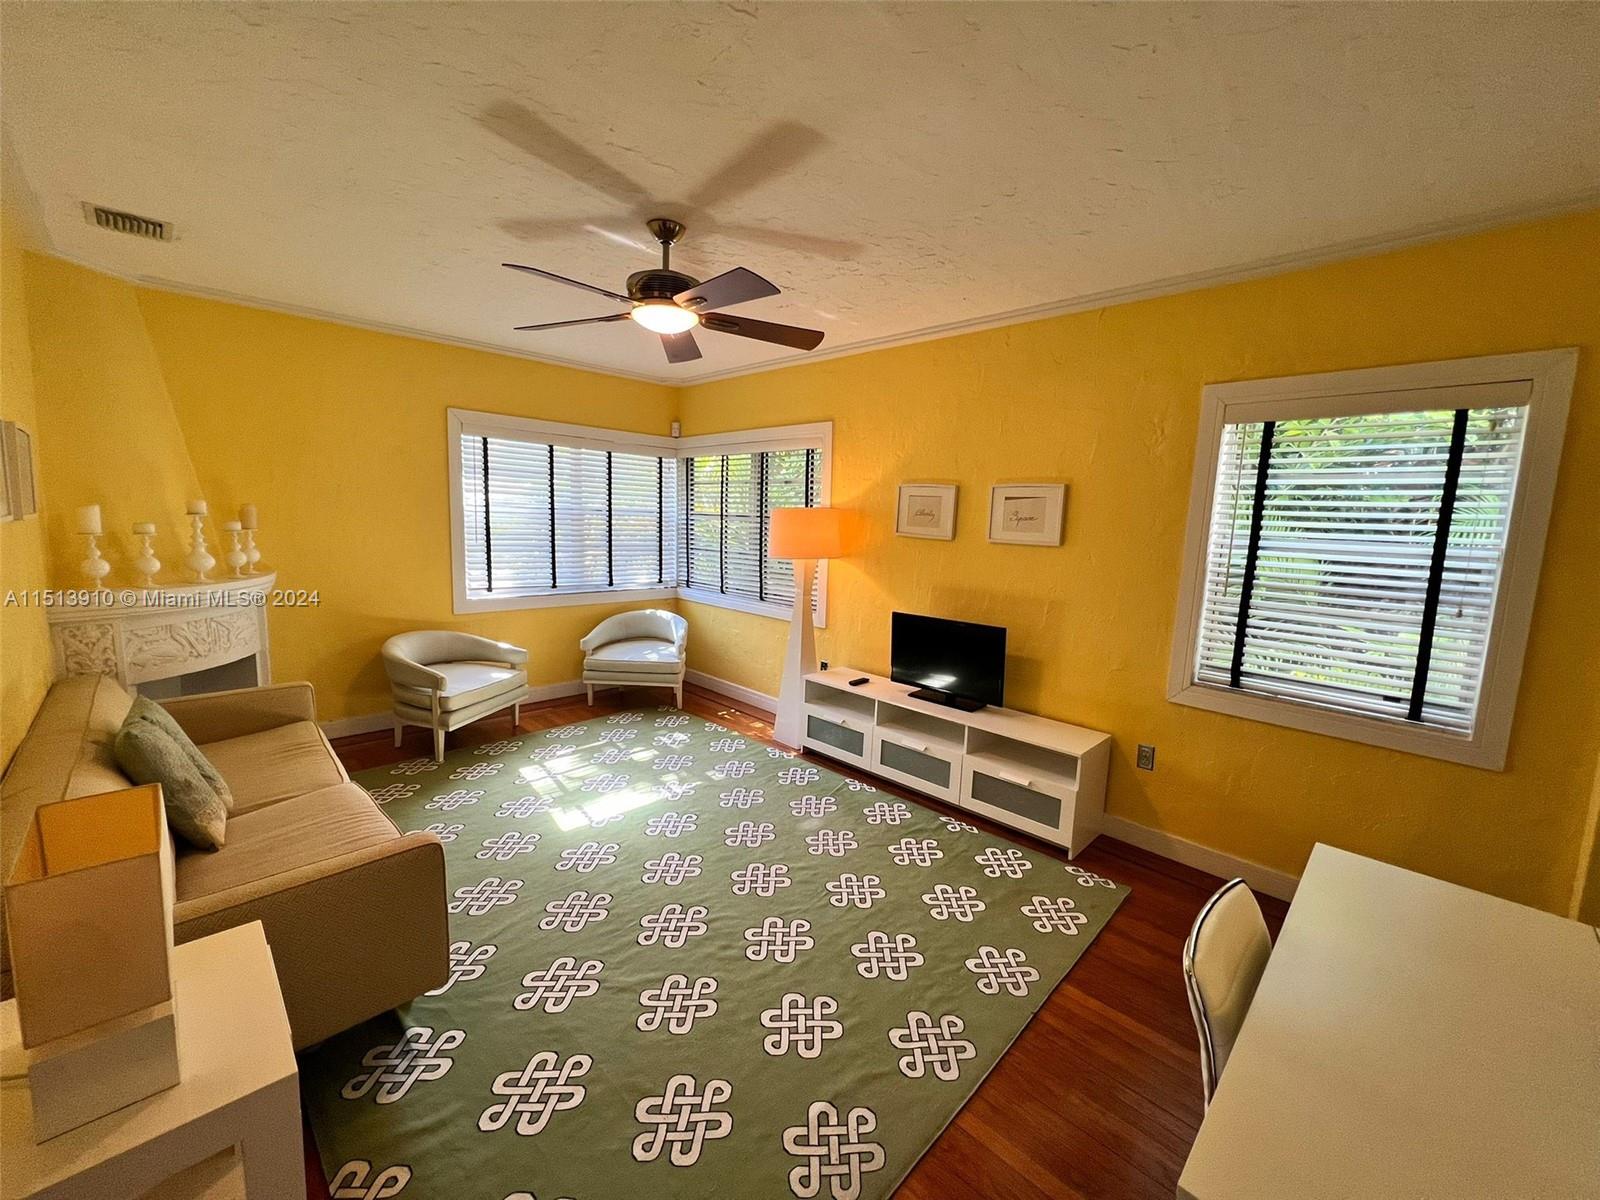 Rental Property at 1553 Meridian Ave 204, Miami Beach, Miami-Dade County, Florida - Bedrooms: 1 
Bathrooms: 1  - $2,000 MO.